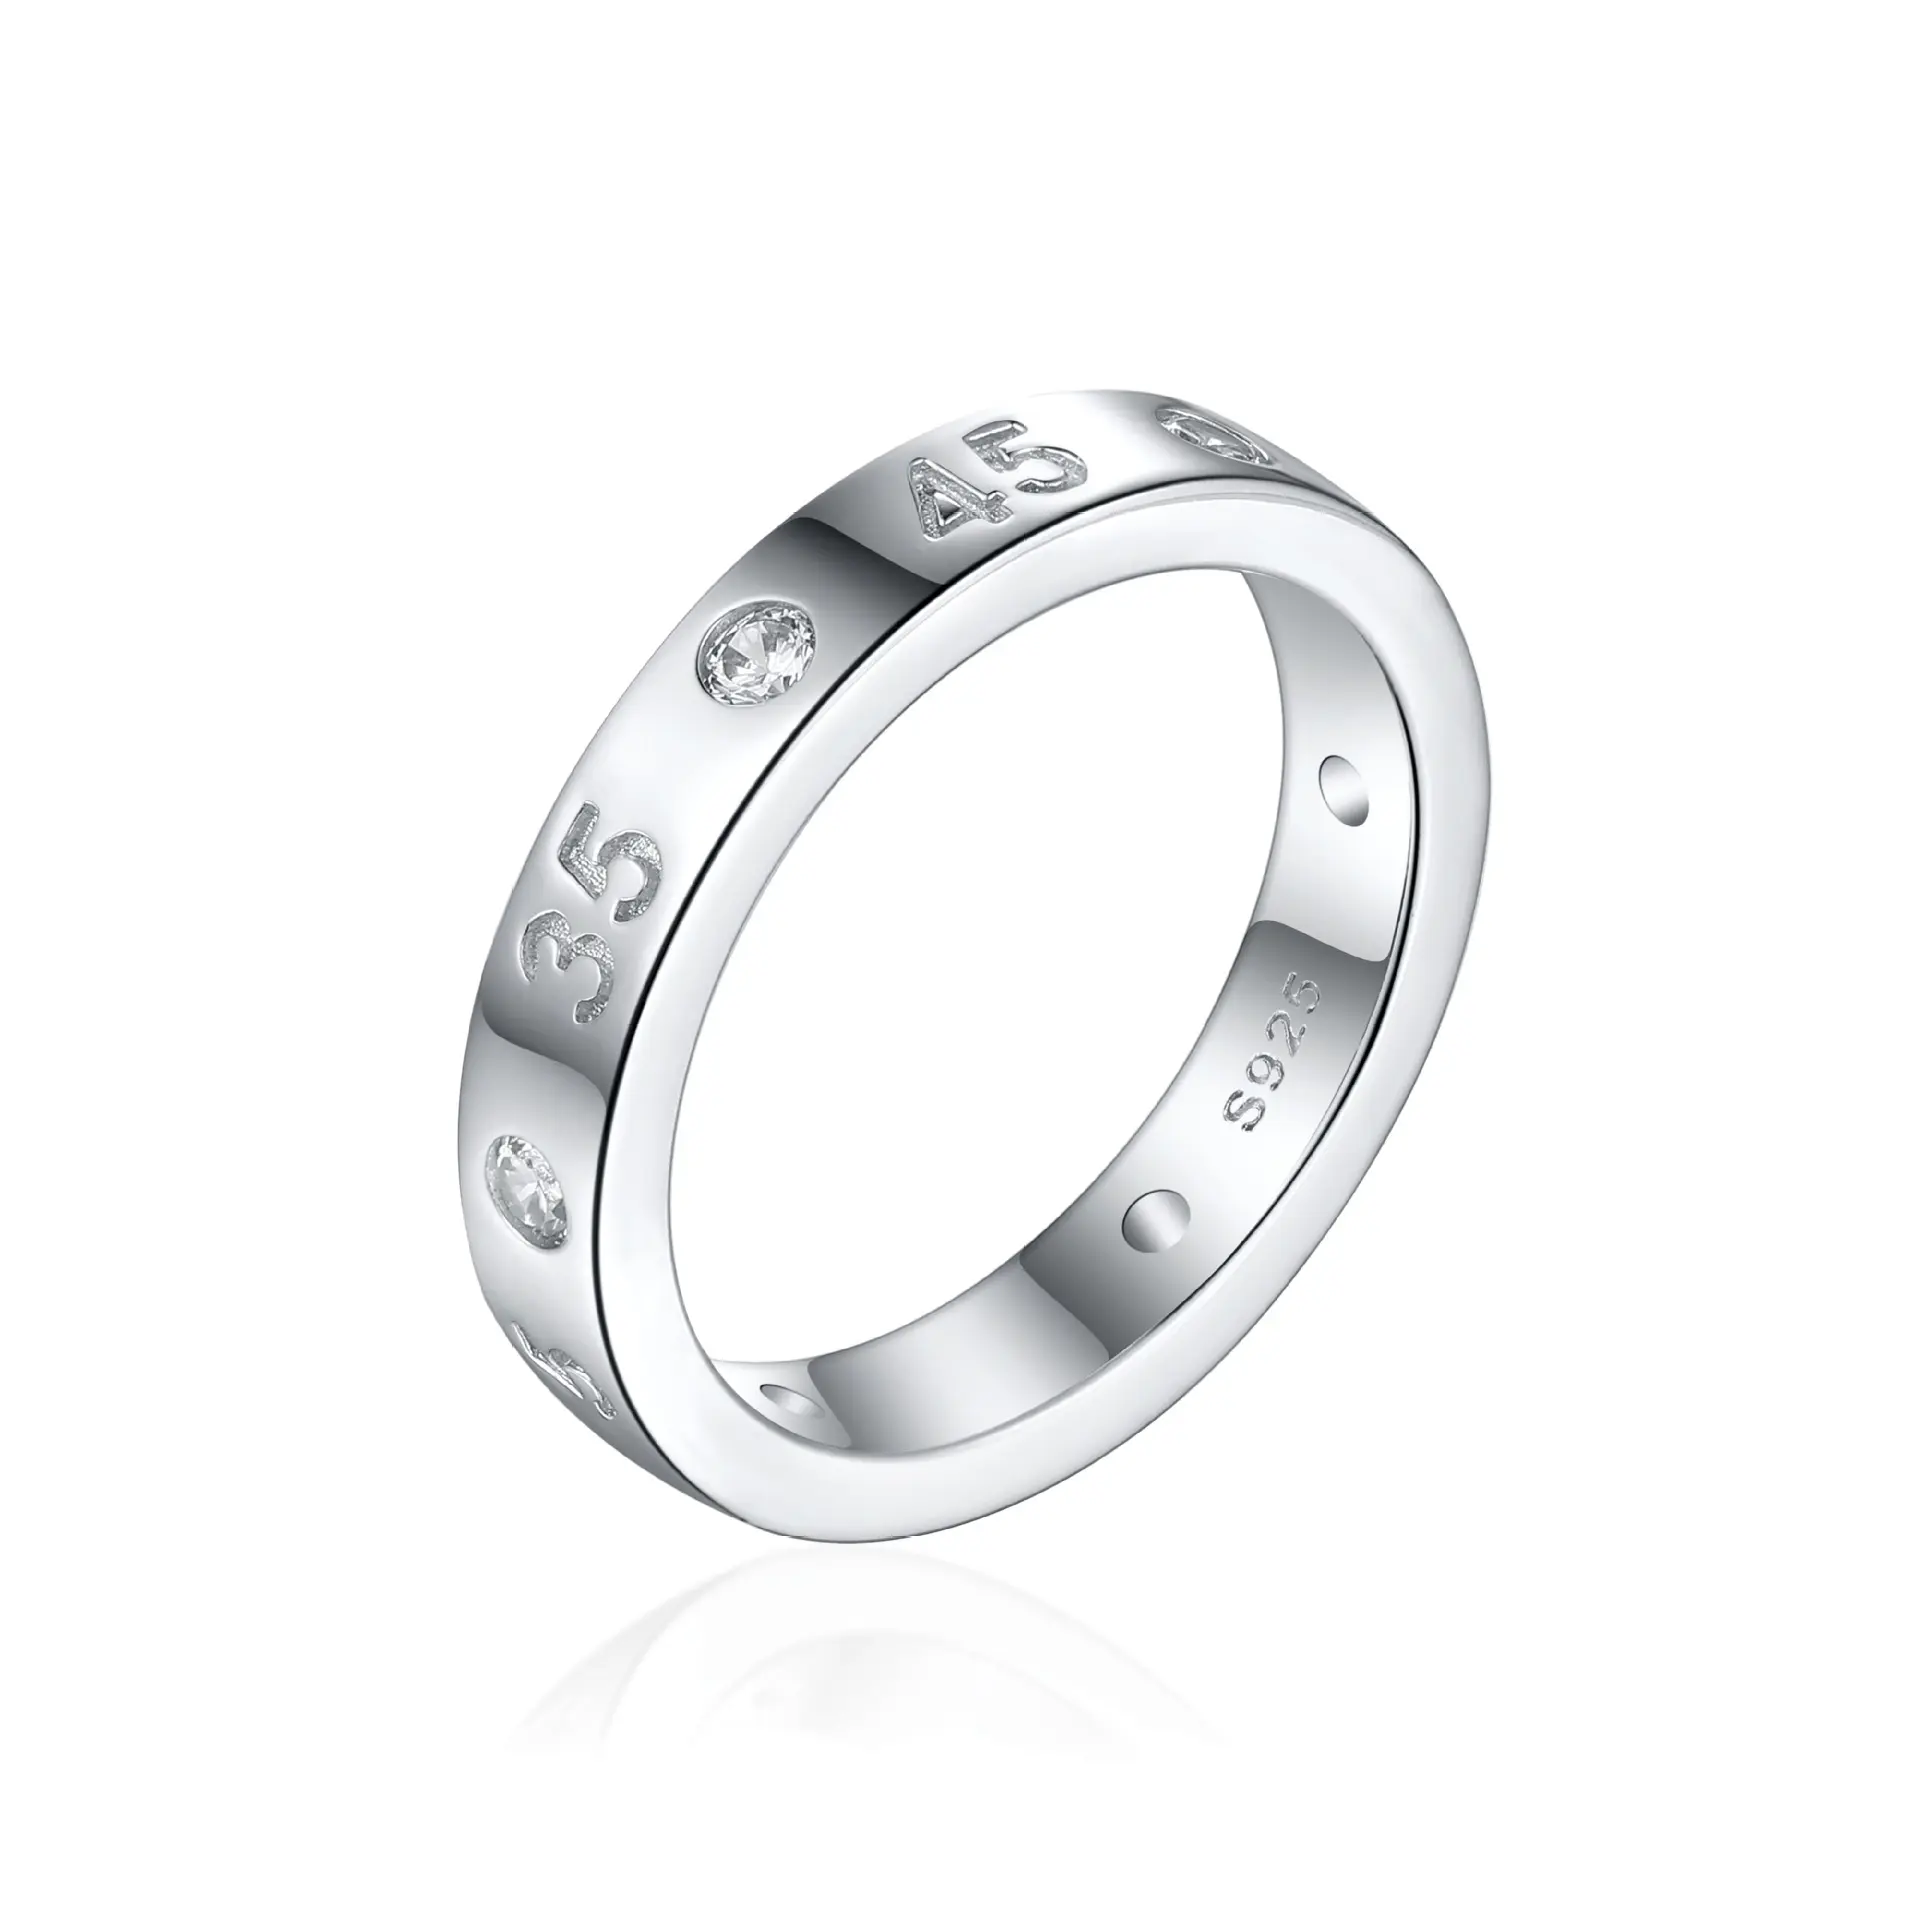 Diskon besar 925 perhiasan cincin pernikahan Moissanite emas padat putih cincin pernikahan Moissanite